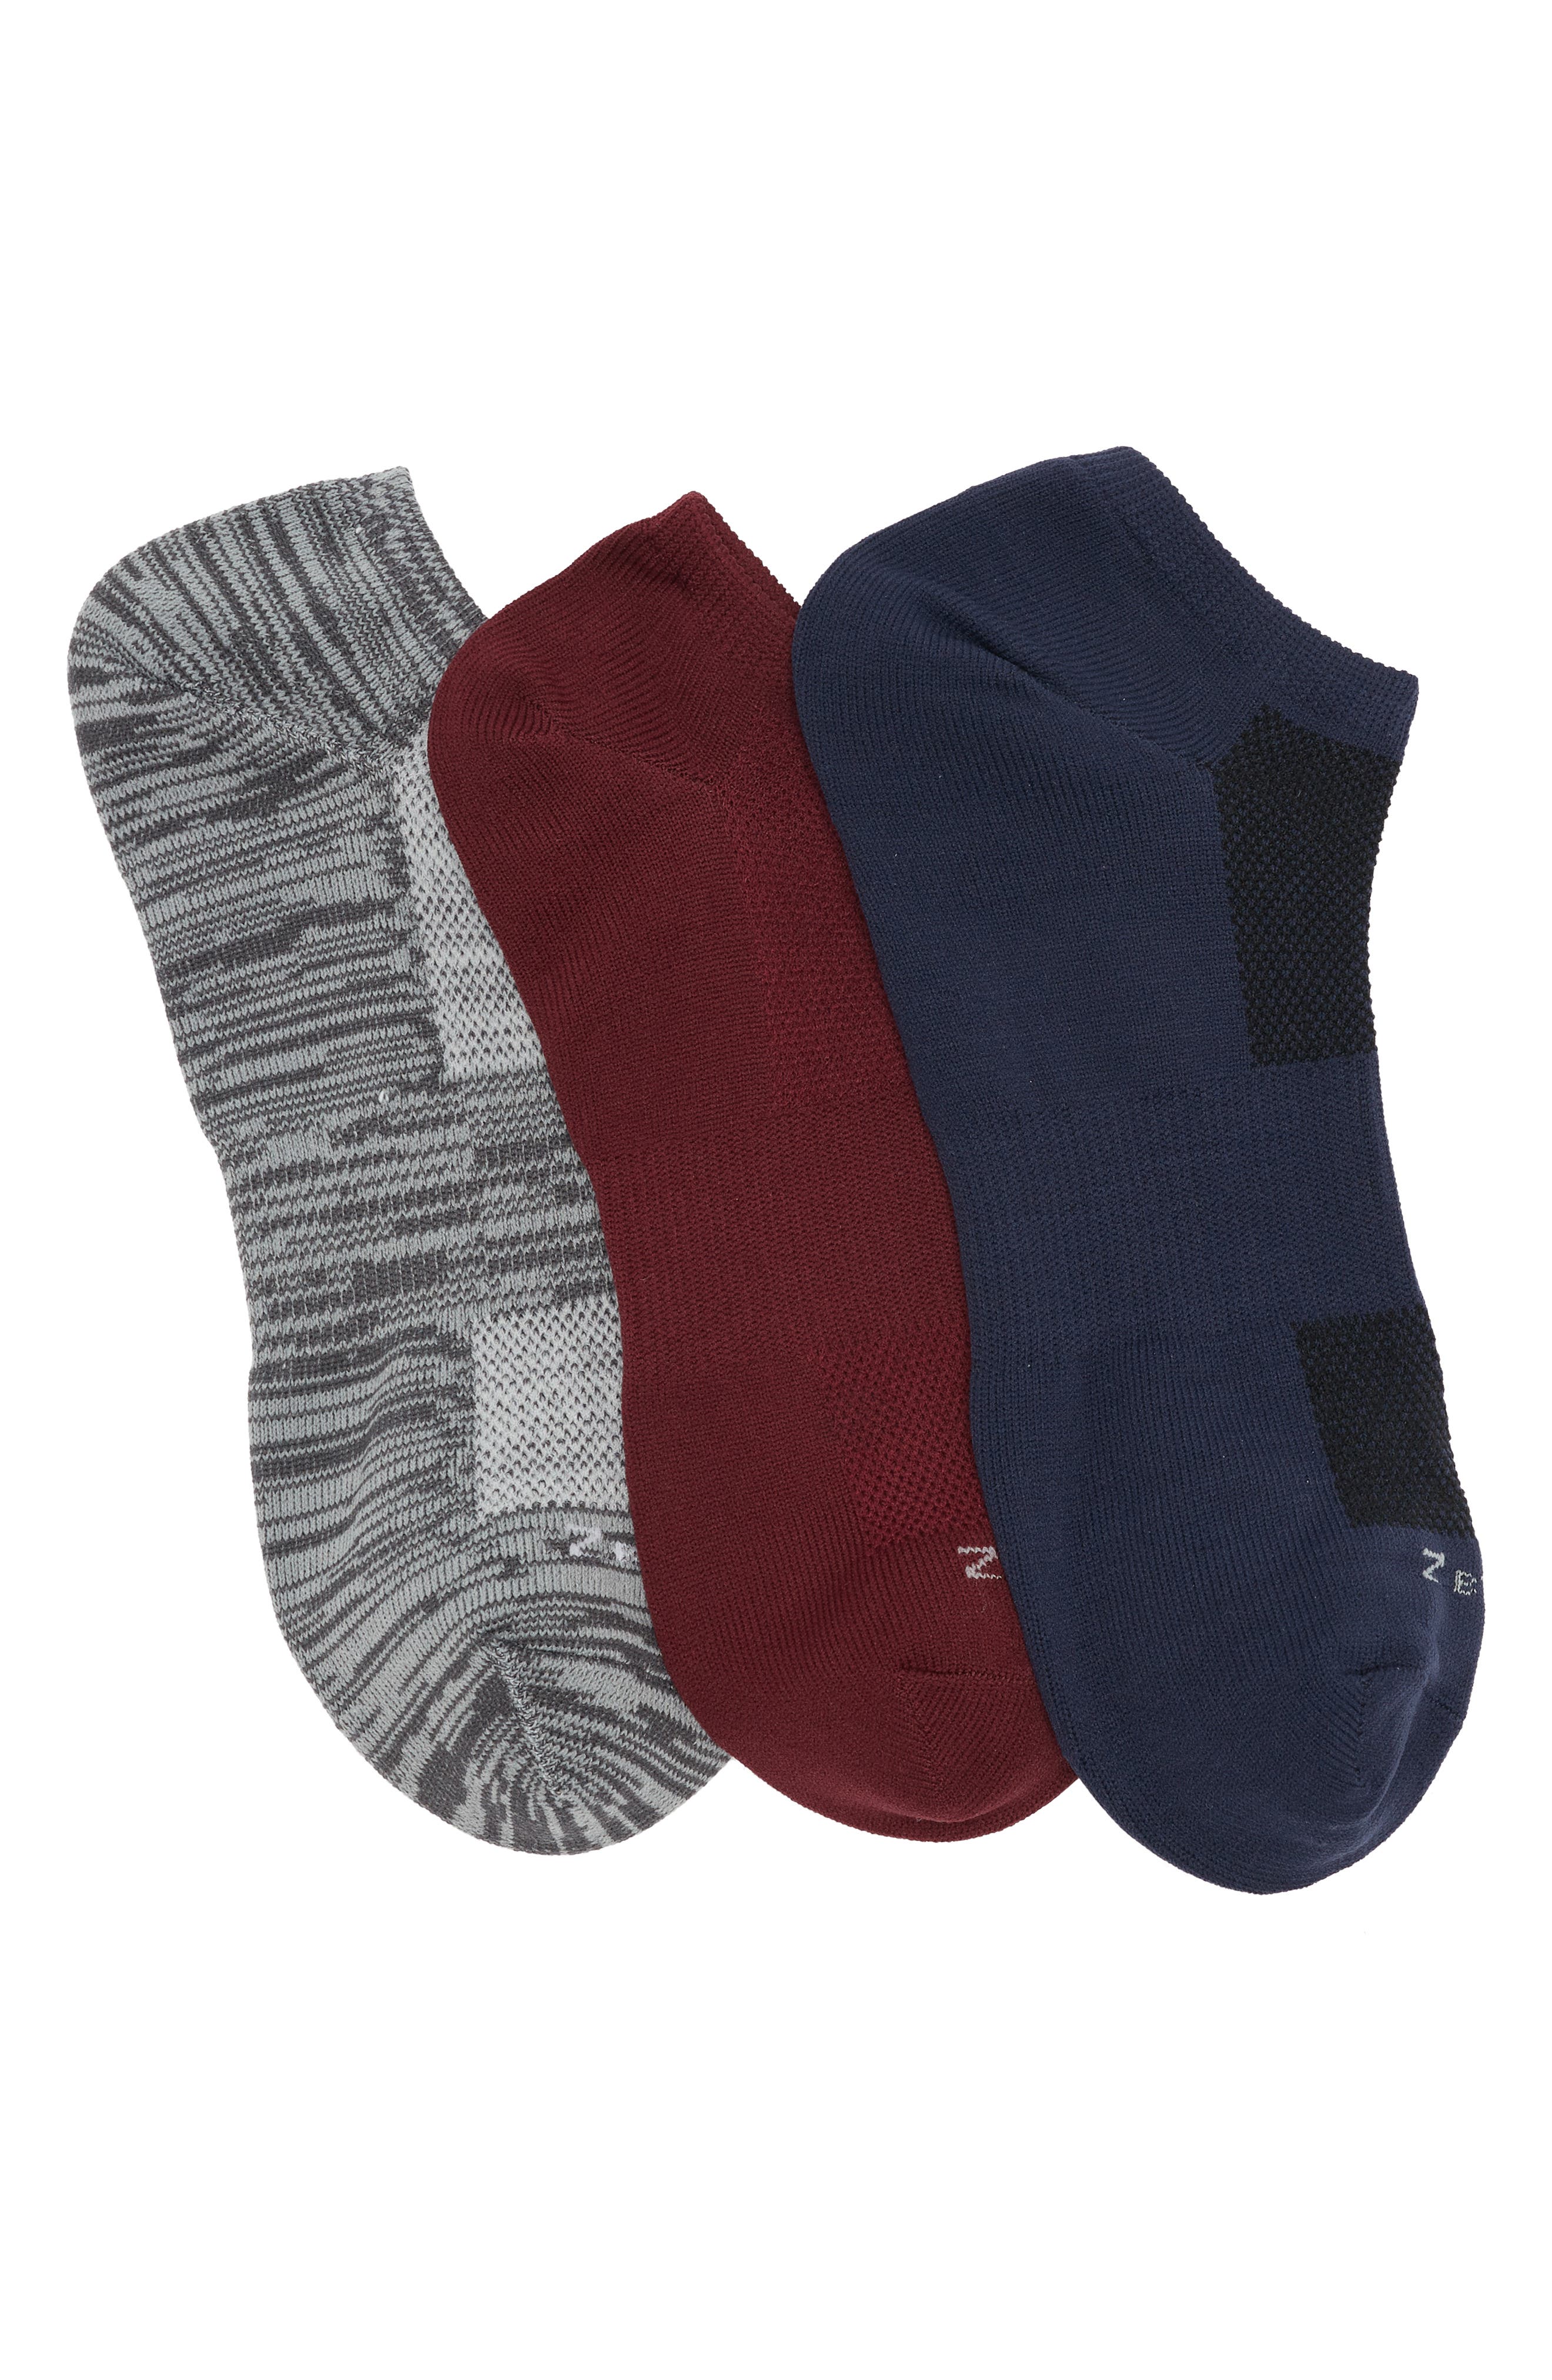 Mesh Micro Ankle Socks - Pack of 3 Z By Zella